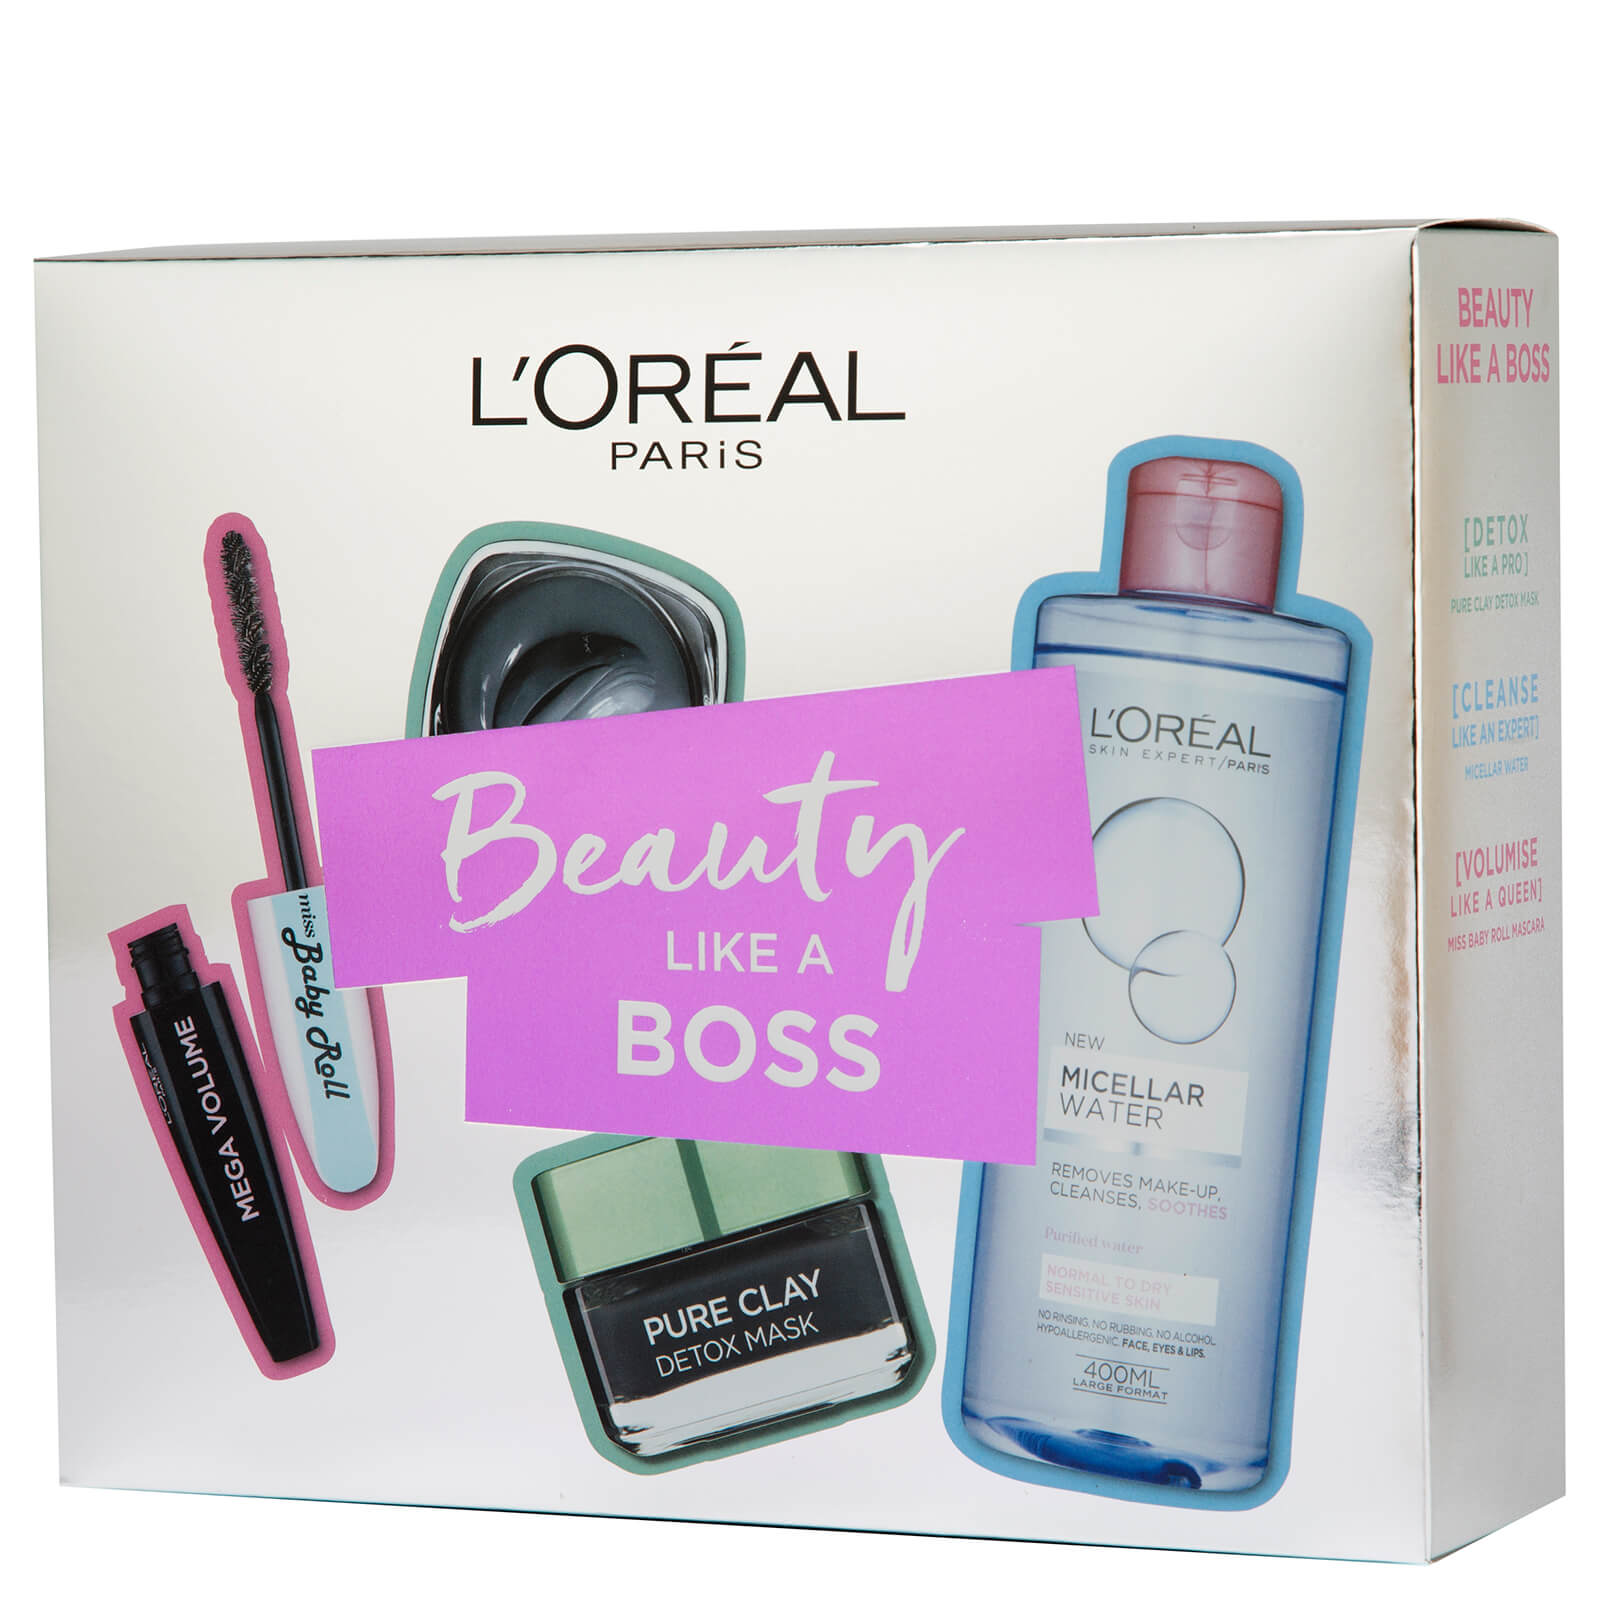 L'Oréal Paris Beauty Like a Boss Gift Set